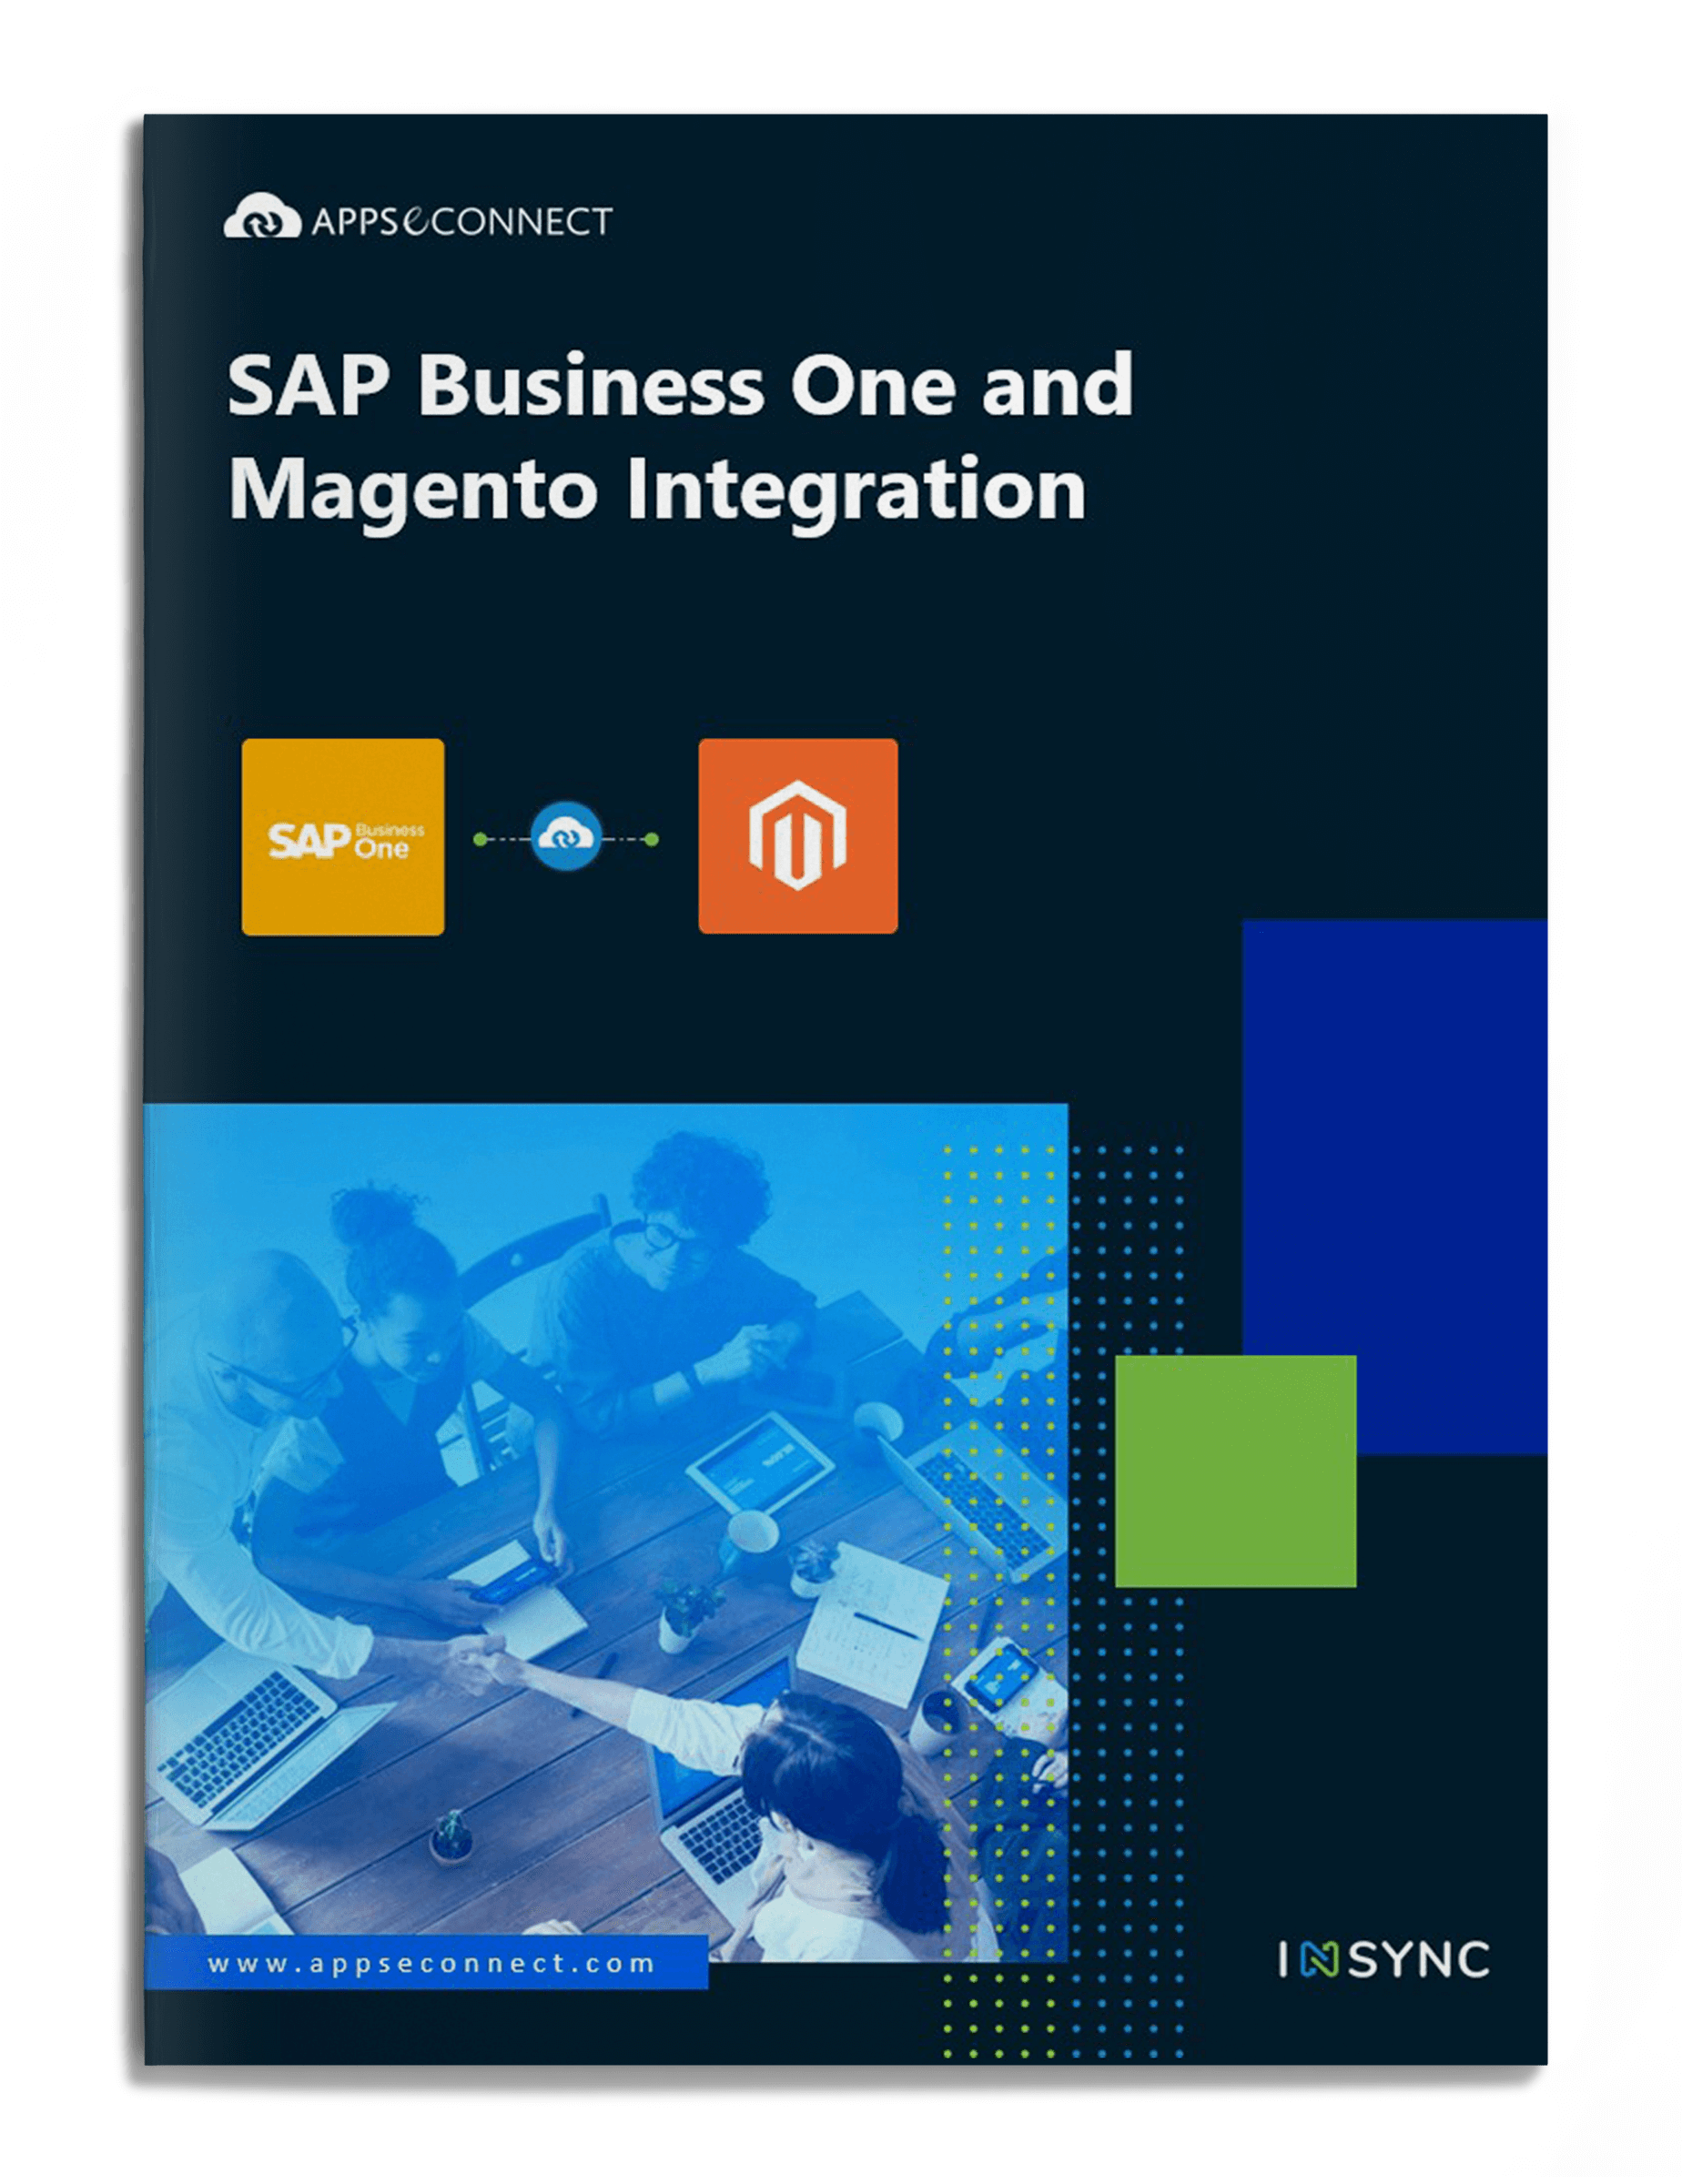 sap-business-one-magento-integration-brochure-cover